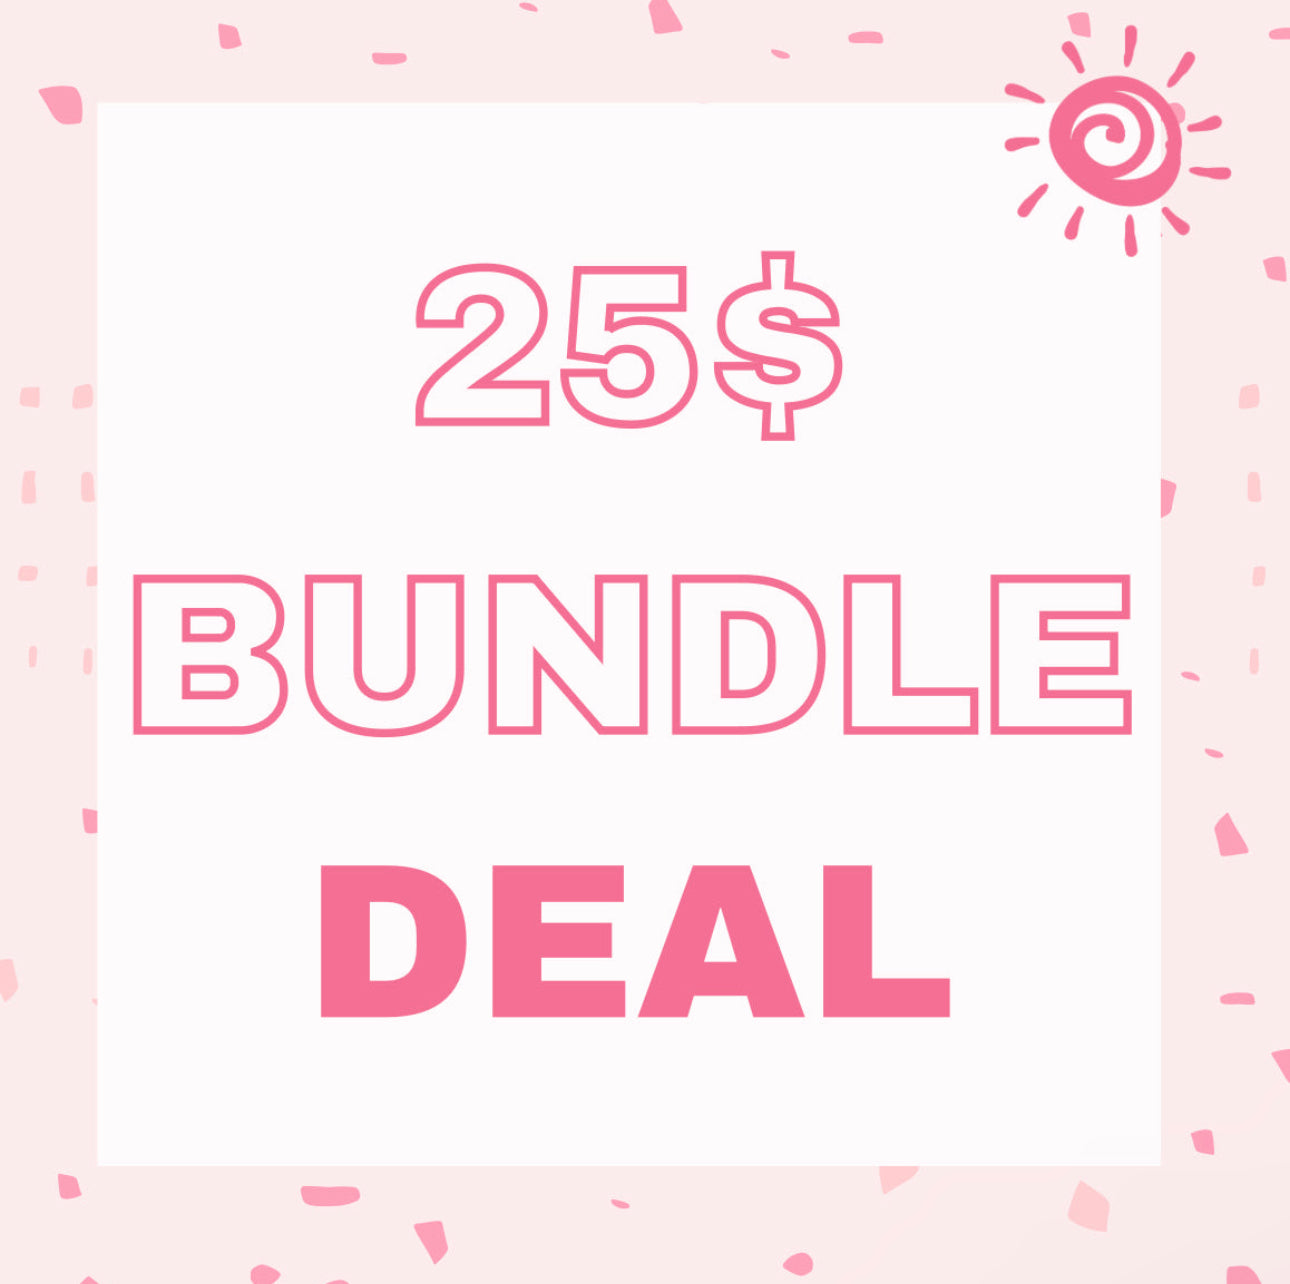 25$ bundle deal